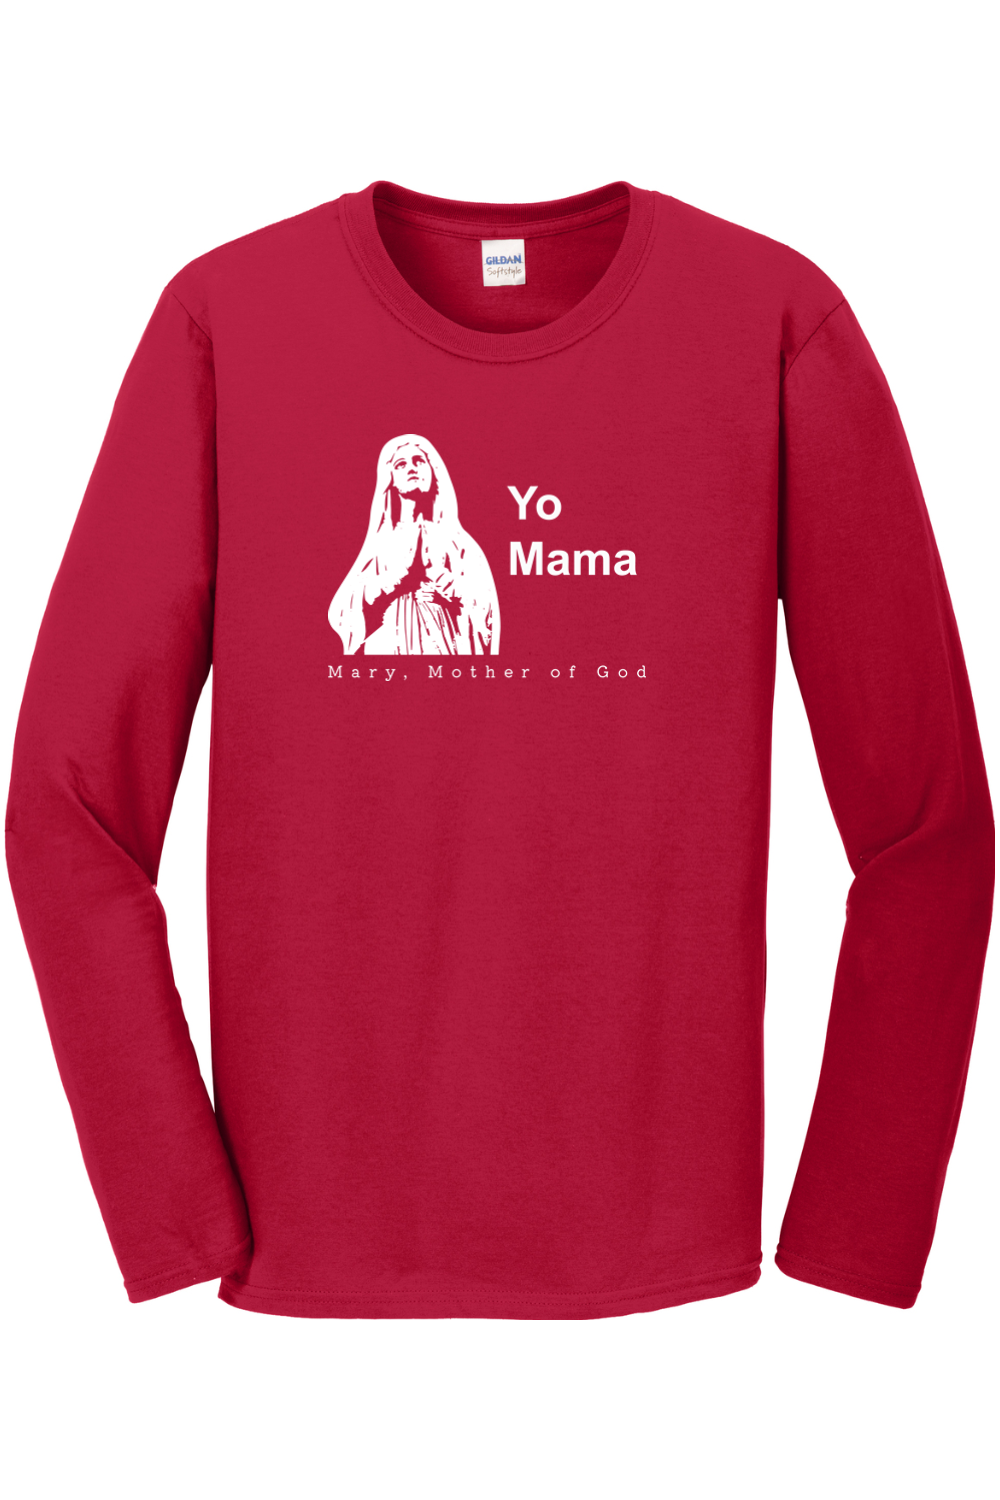 Yo Mama - Mary, Mother of God Long Sleeve